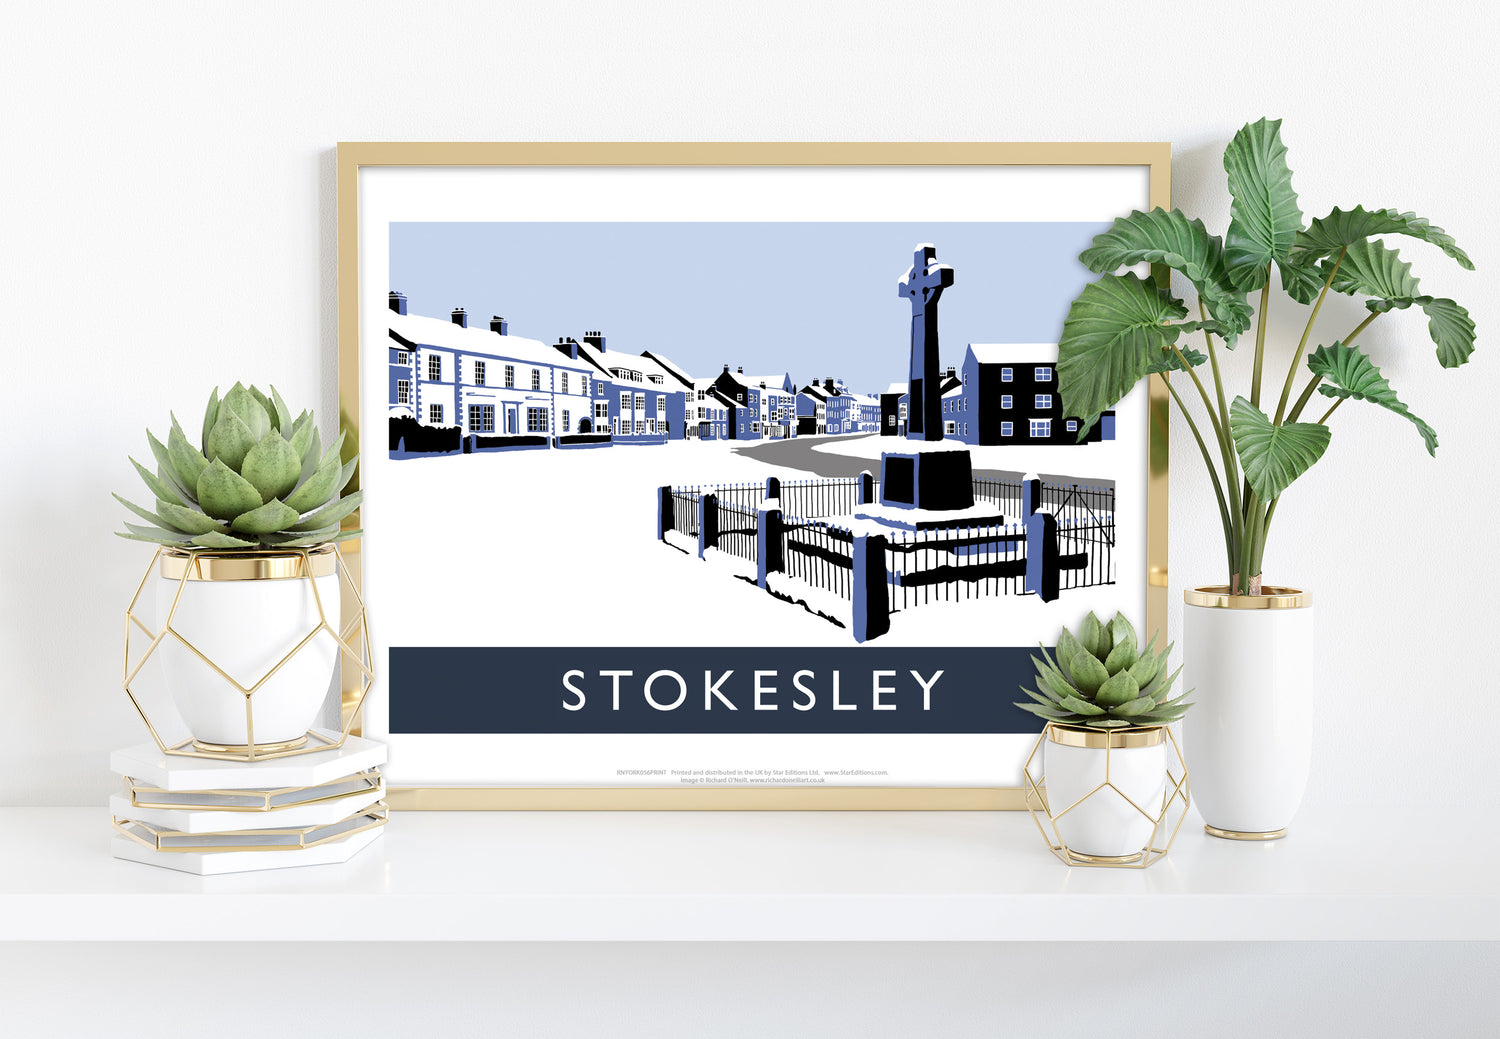 Stokesley, Yorkshire - Art Print